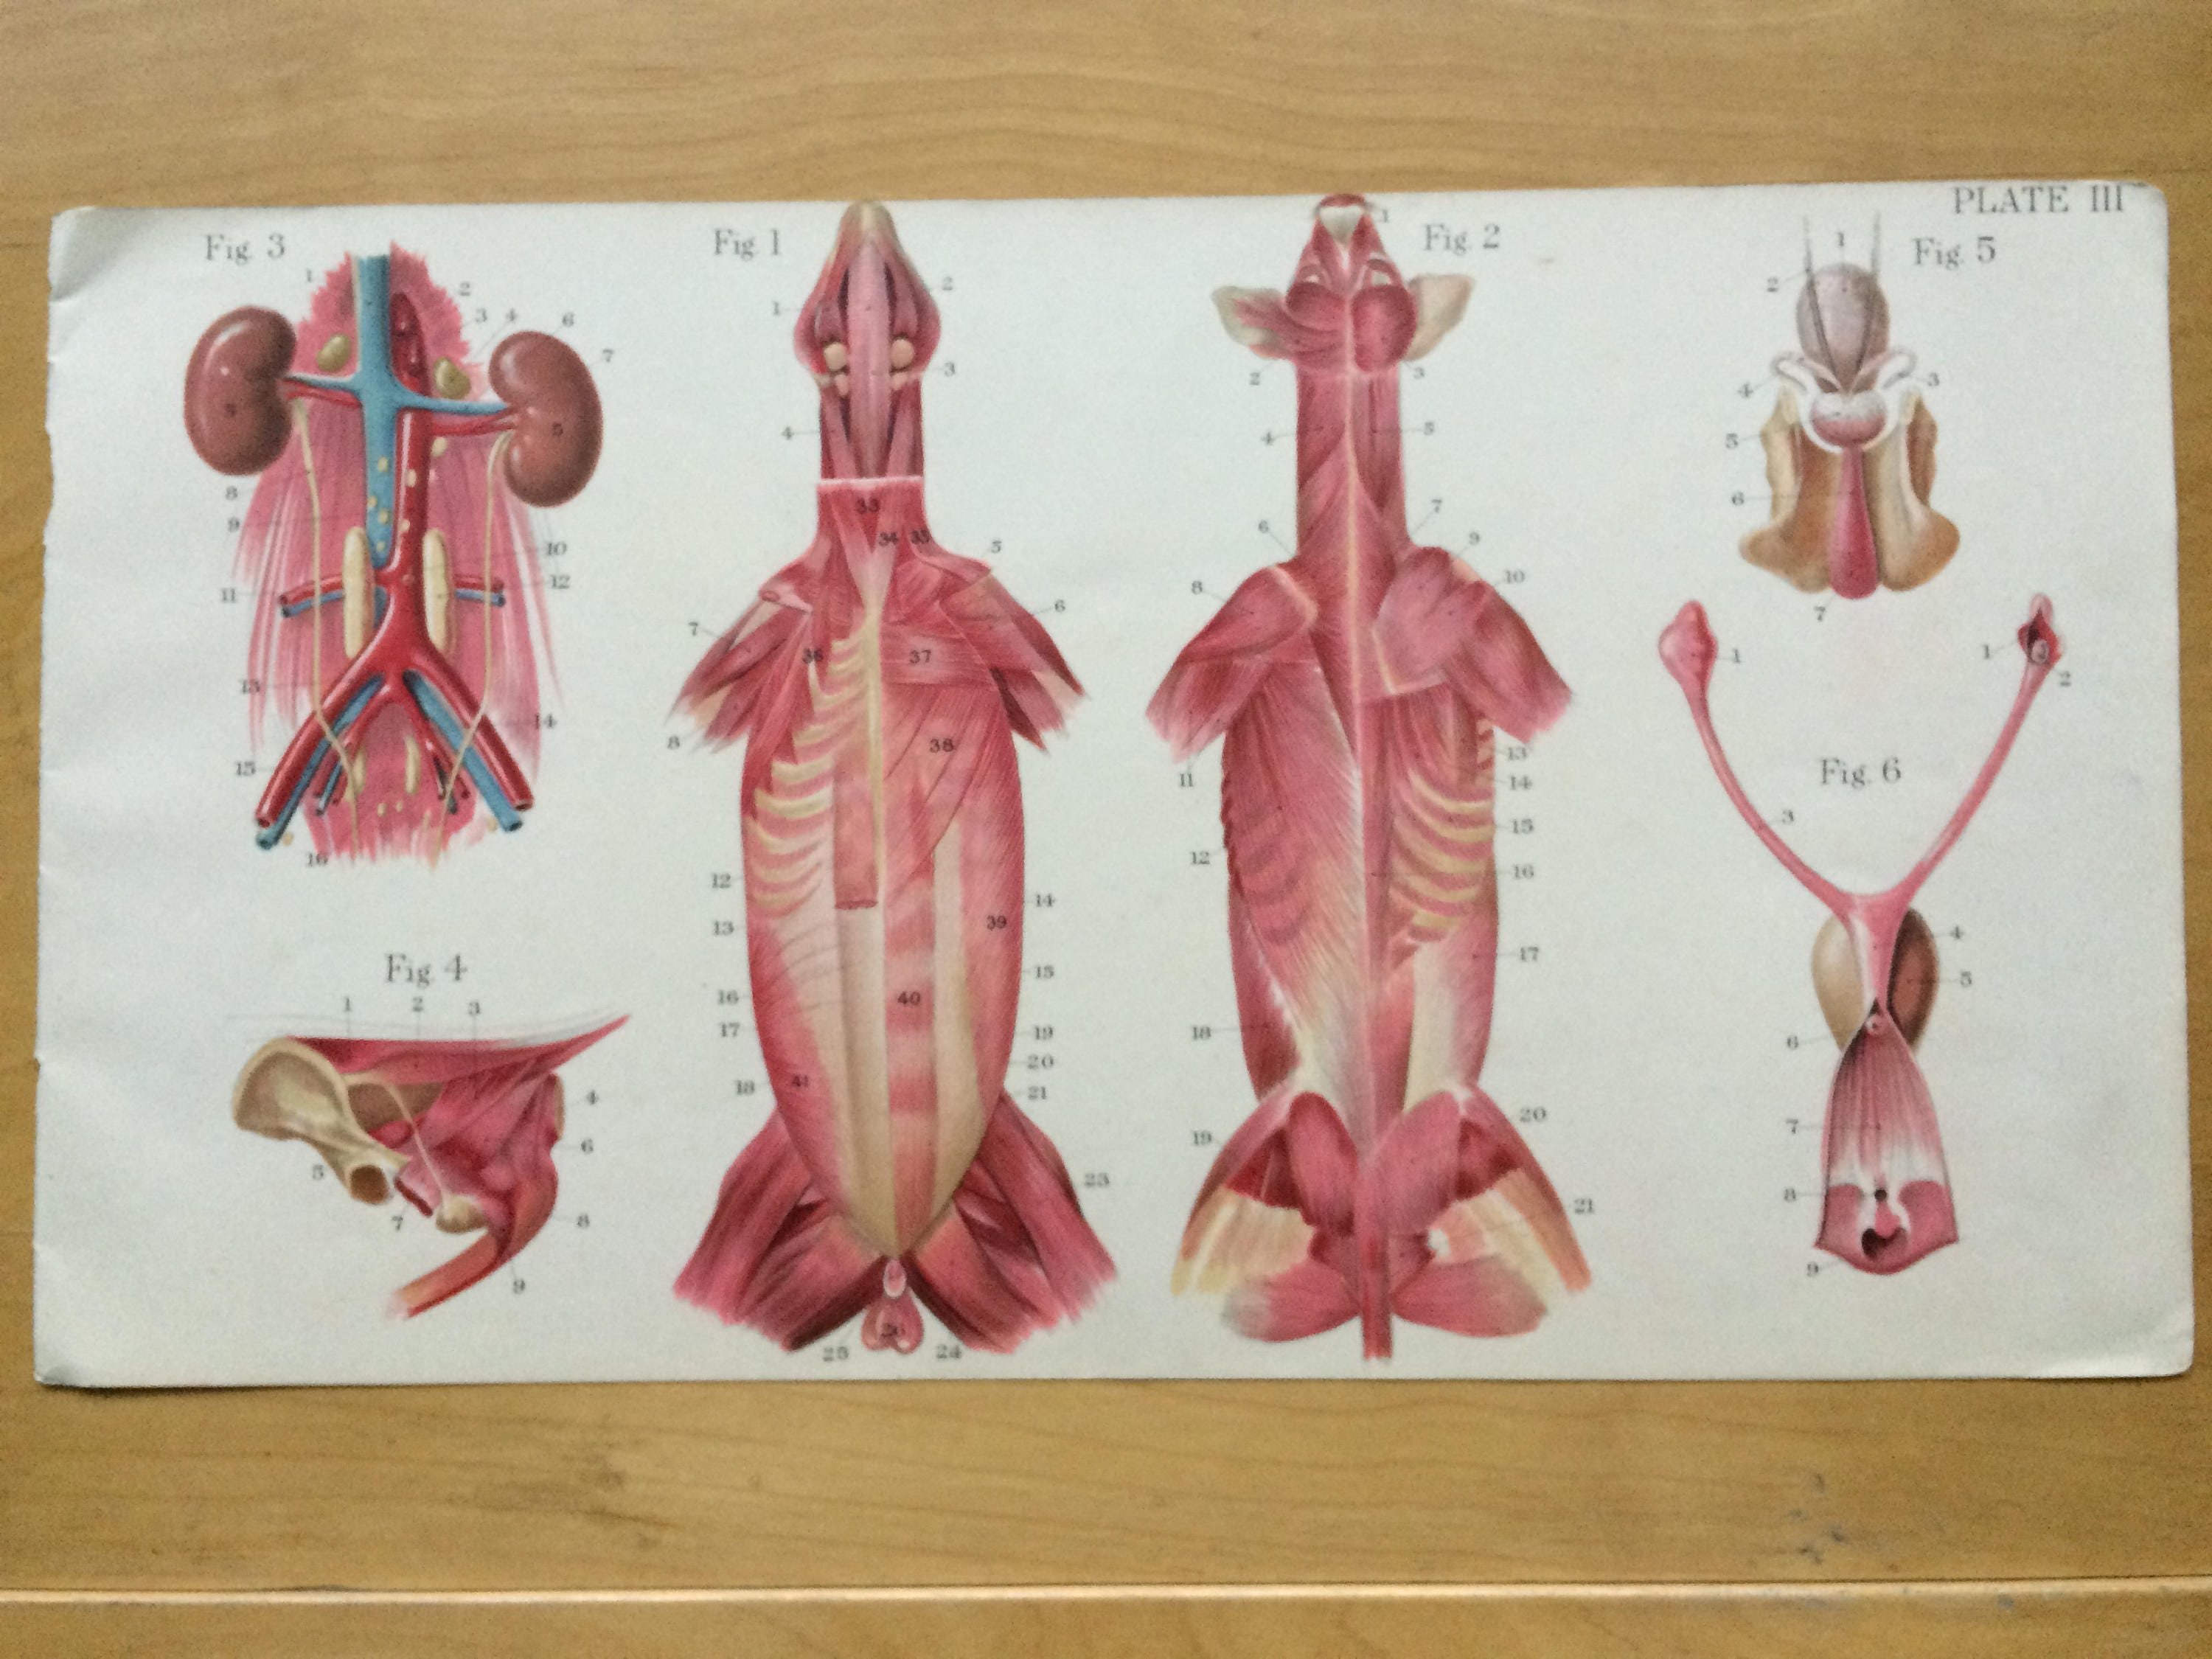 1921 Canine Anatomy Large Original Antique Illustration - Dog Muscles